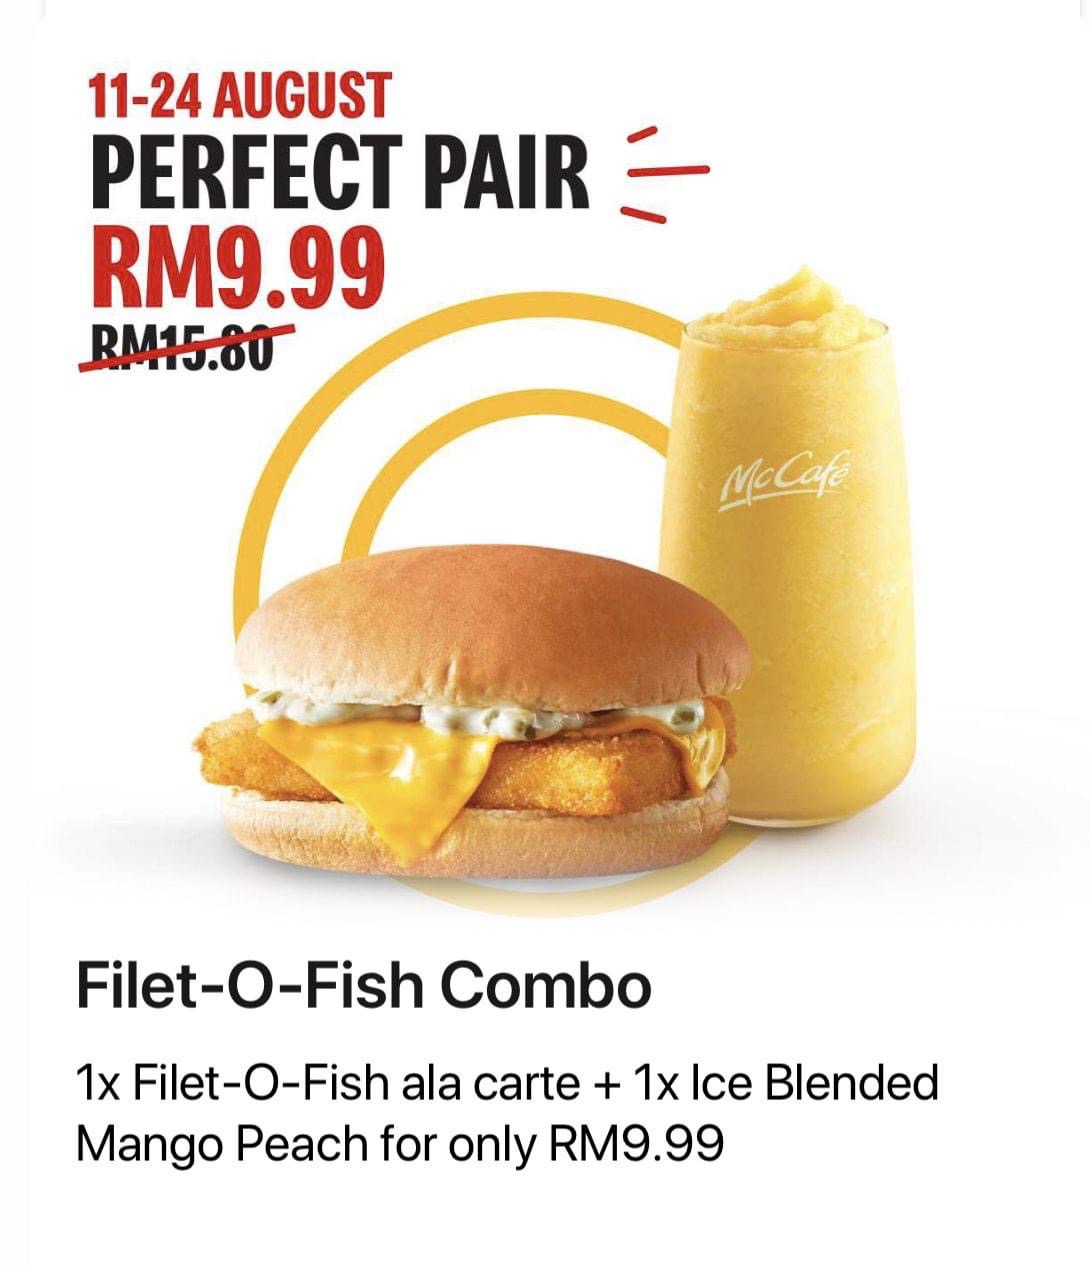 McDonald's RM9.99 August 2021